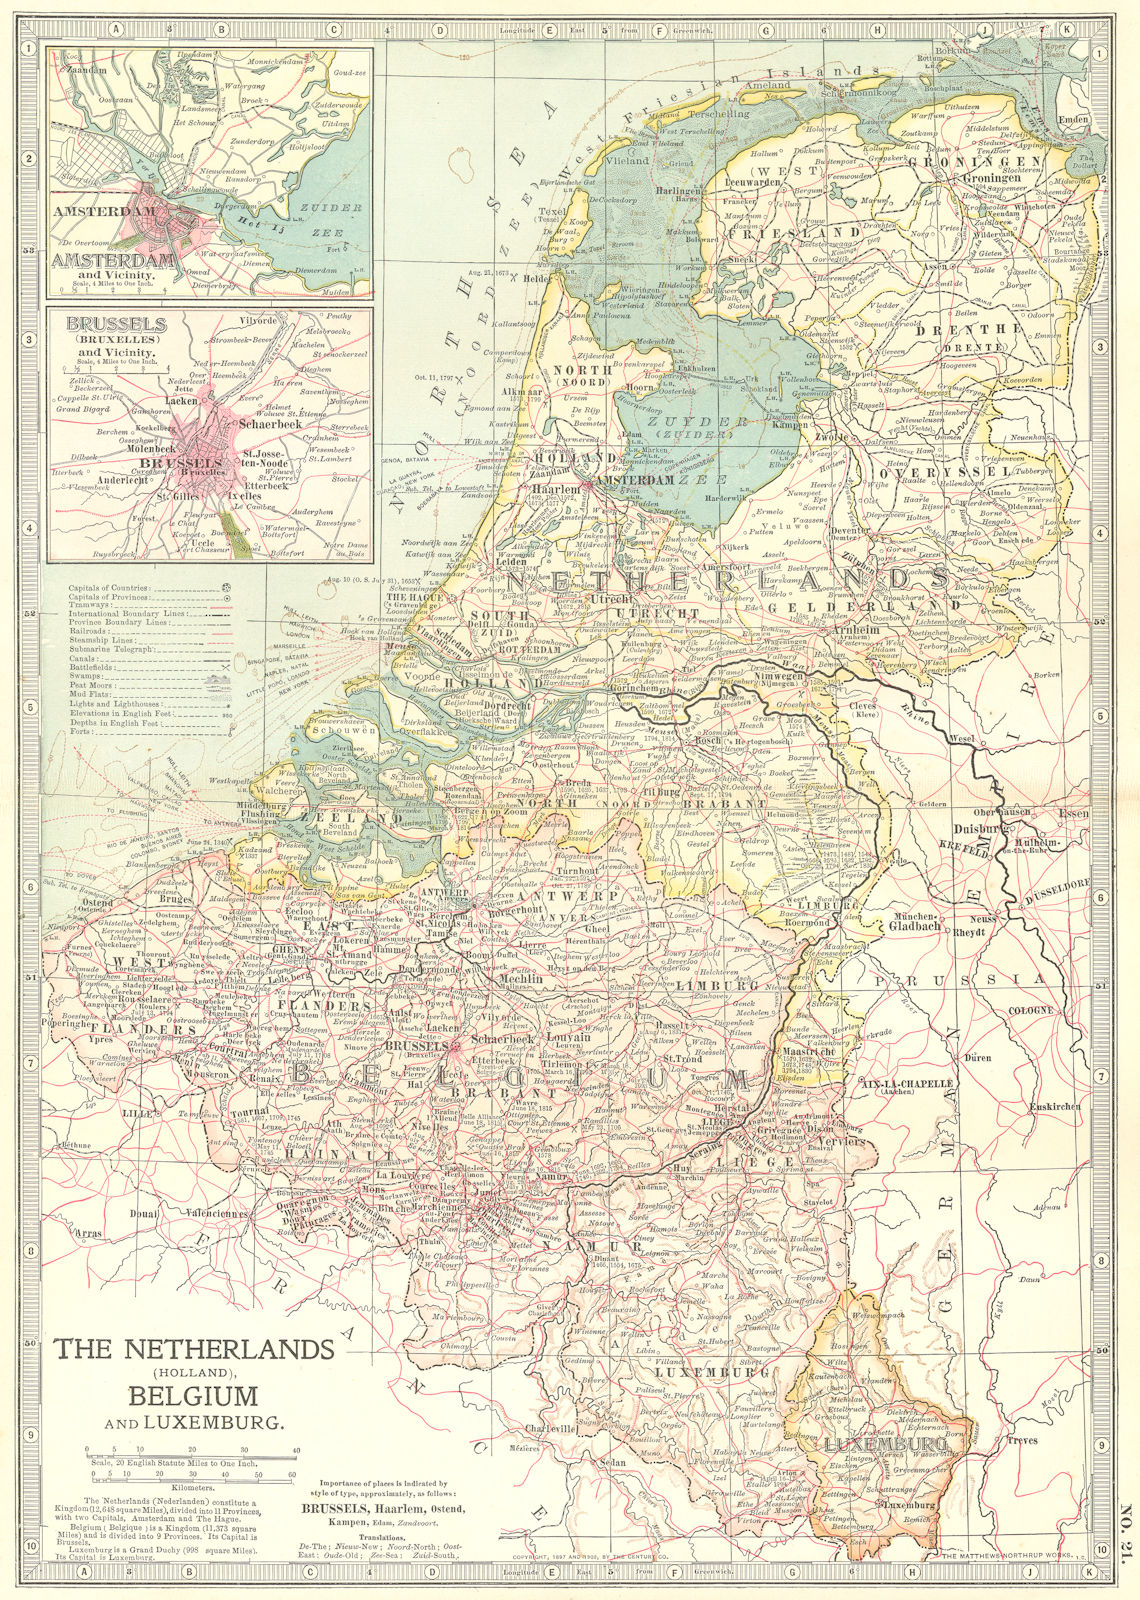 NETHERLANDS BELGIUM LUX.Amsterdam Brussels.Shows battlefields/dates 1903 map